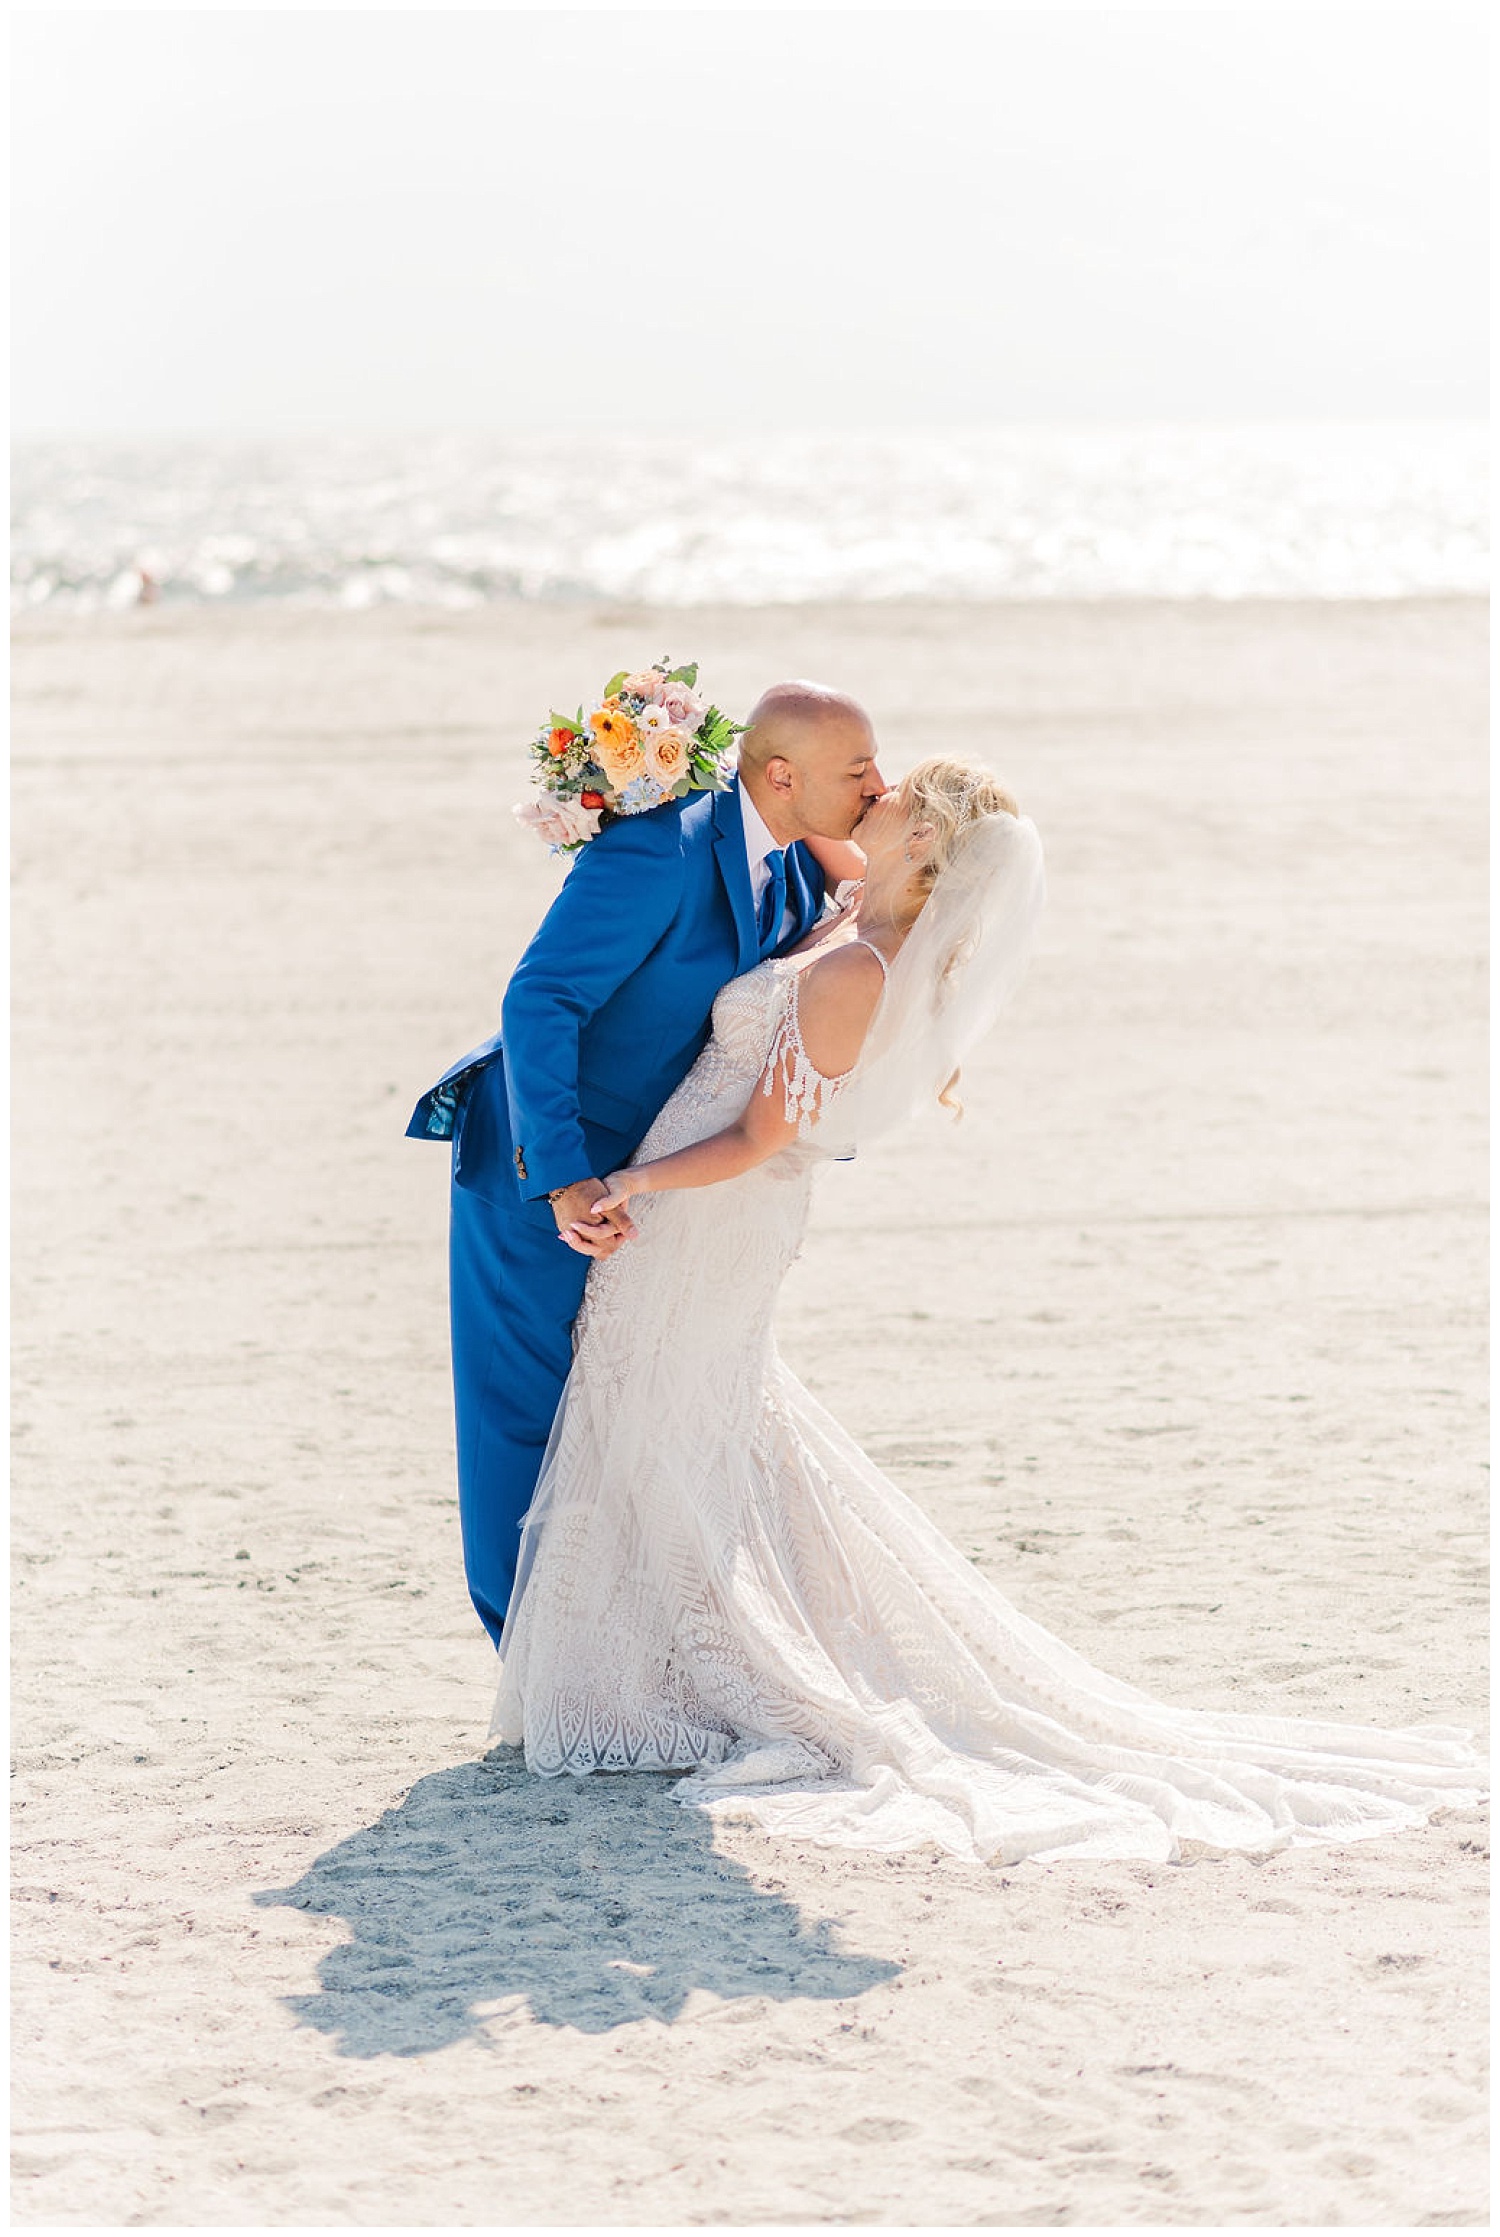 Wilmington North Carolina photographer shooting a wedding couple